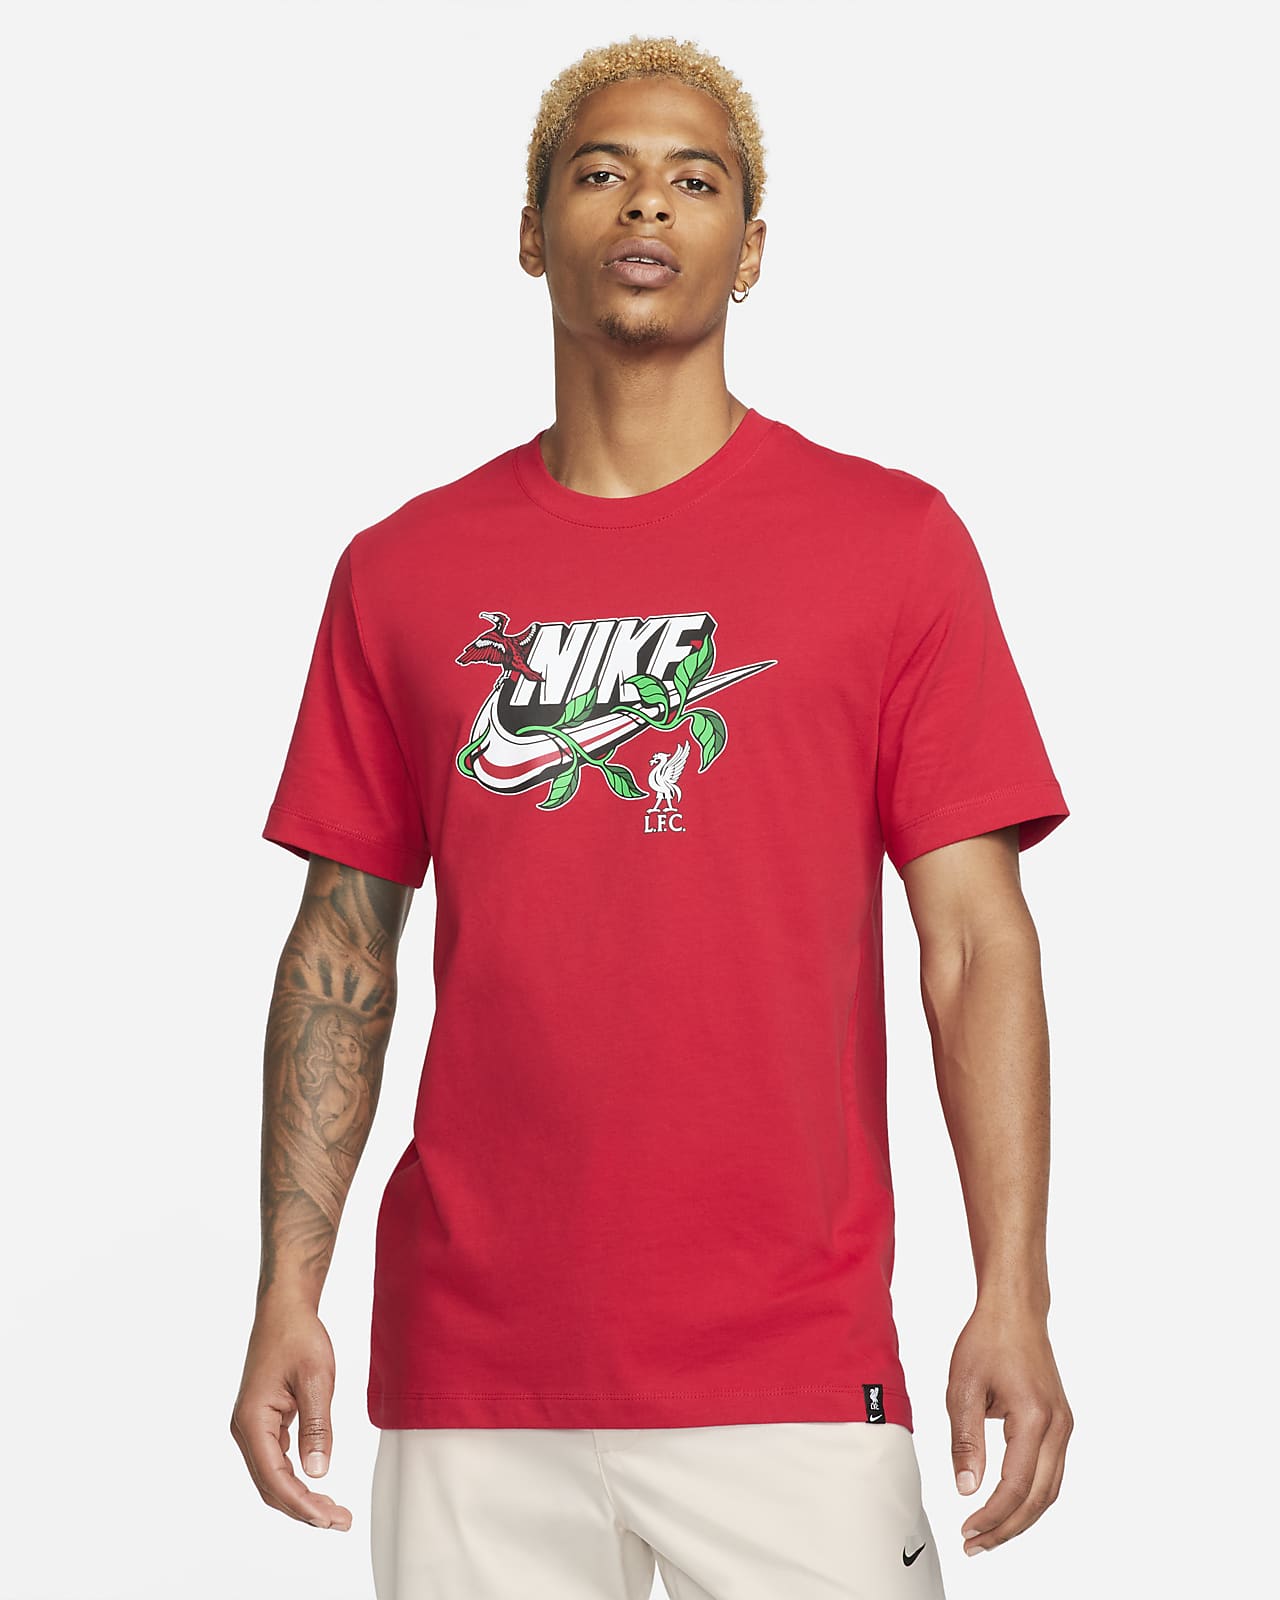 Liverpool FC Men's Nike T-Shirt.